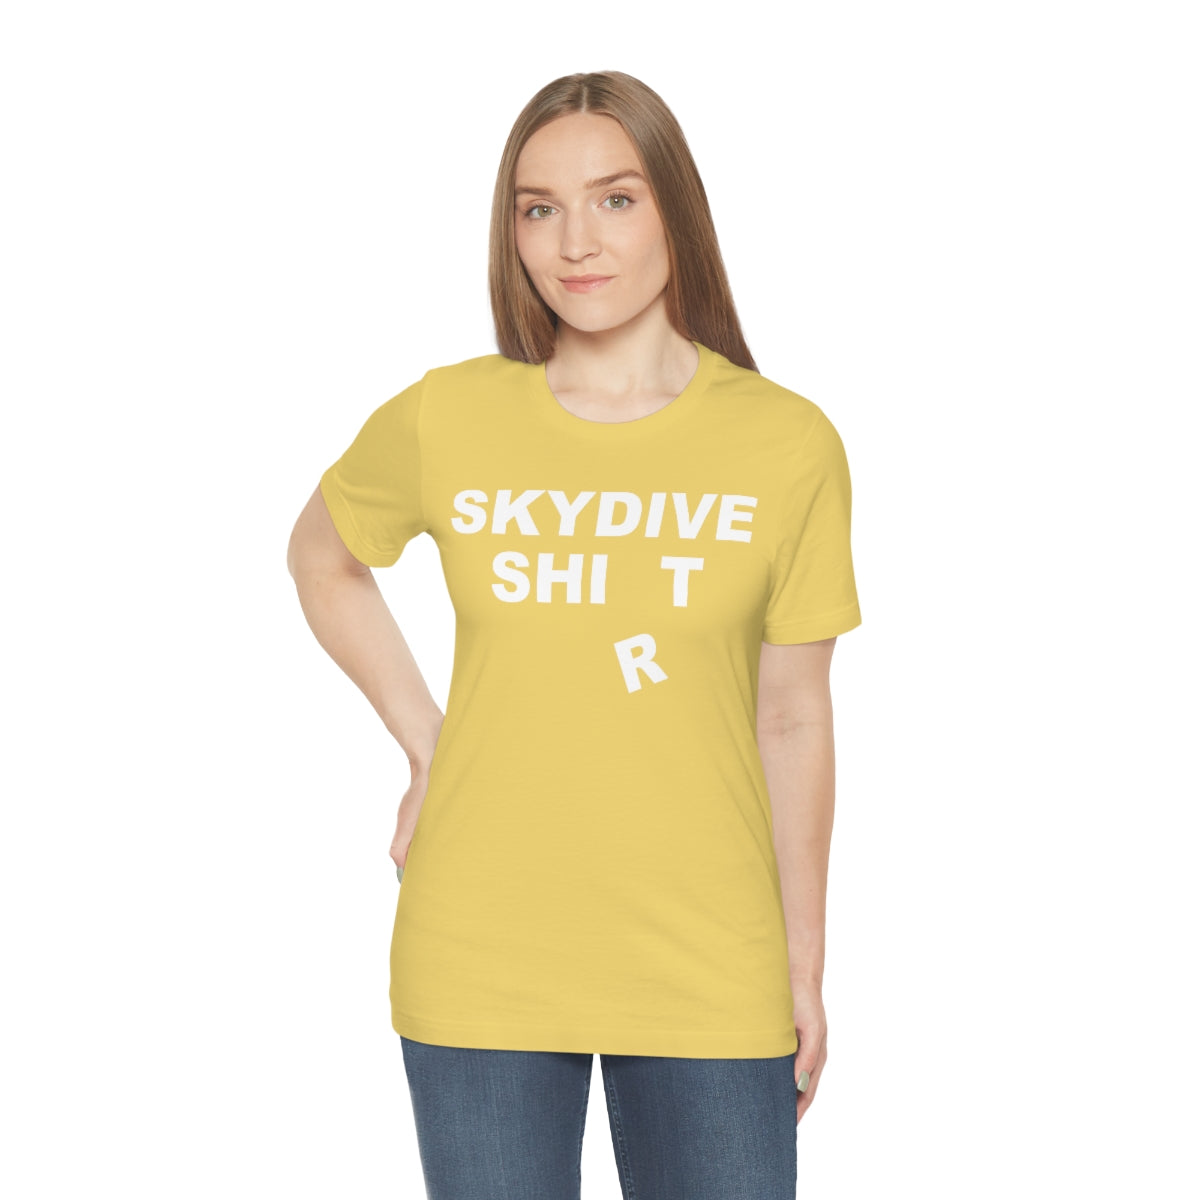 SKYDIVE SH*T T-Shirt